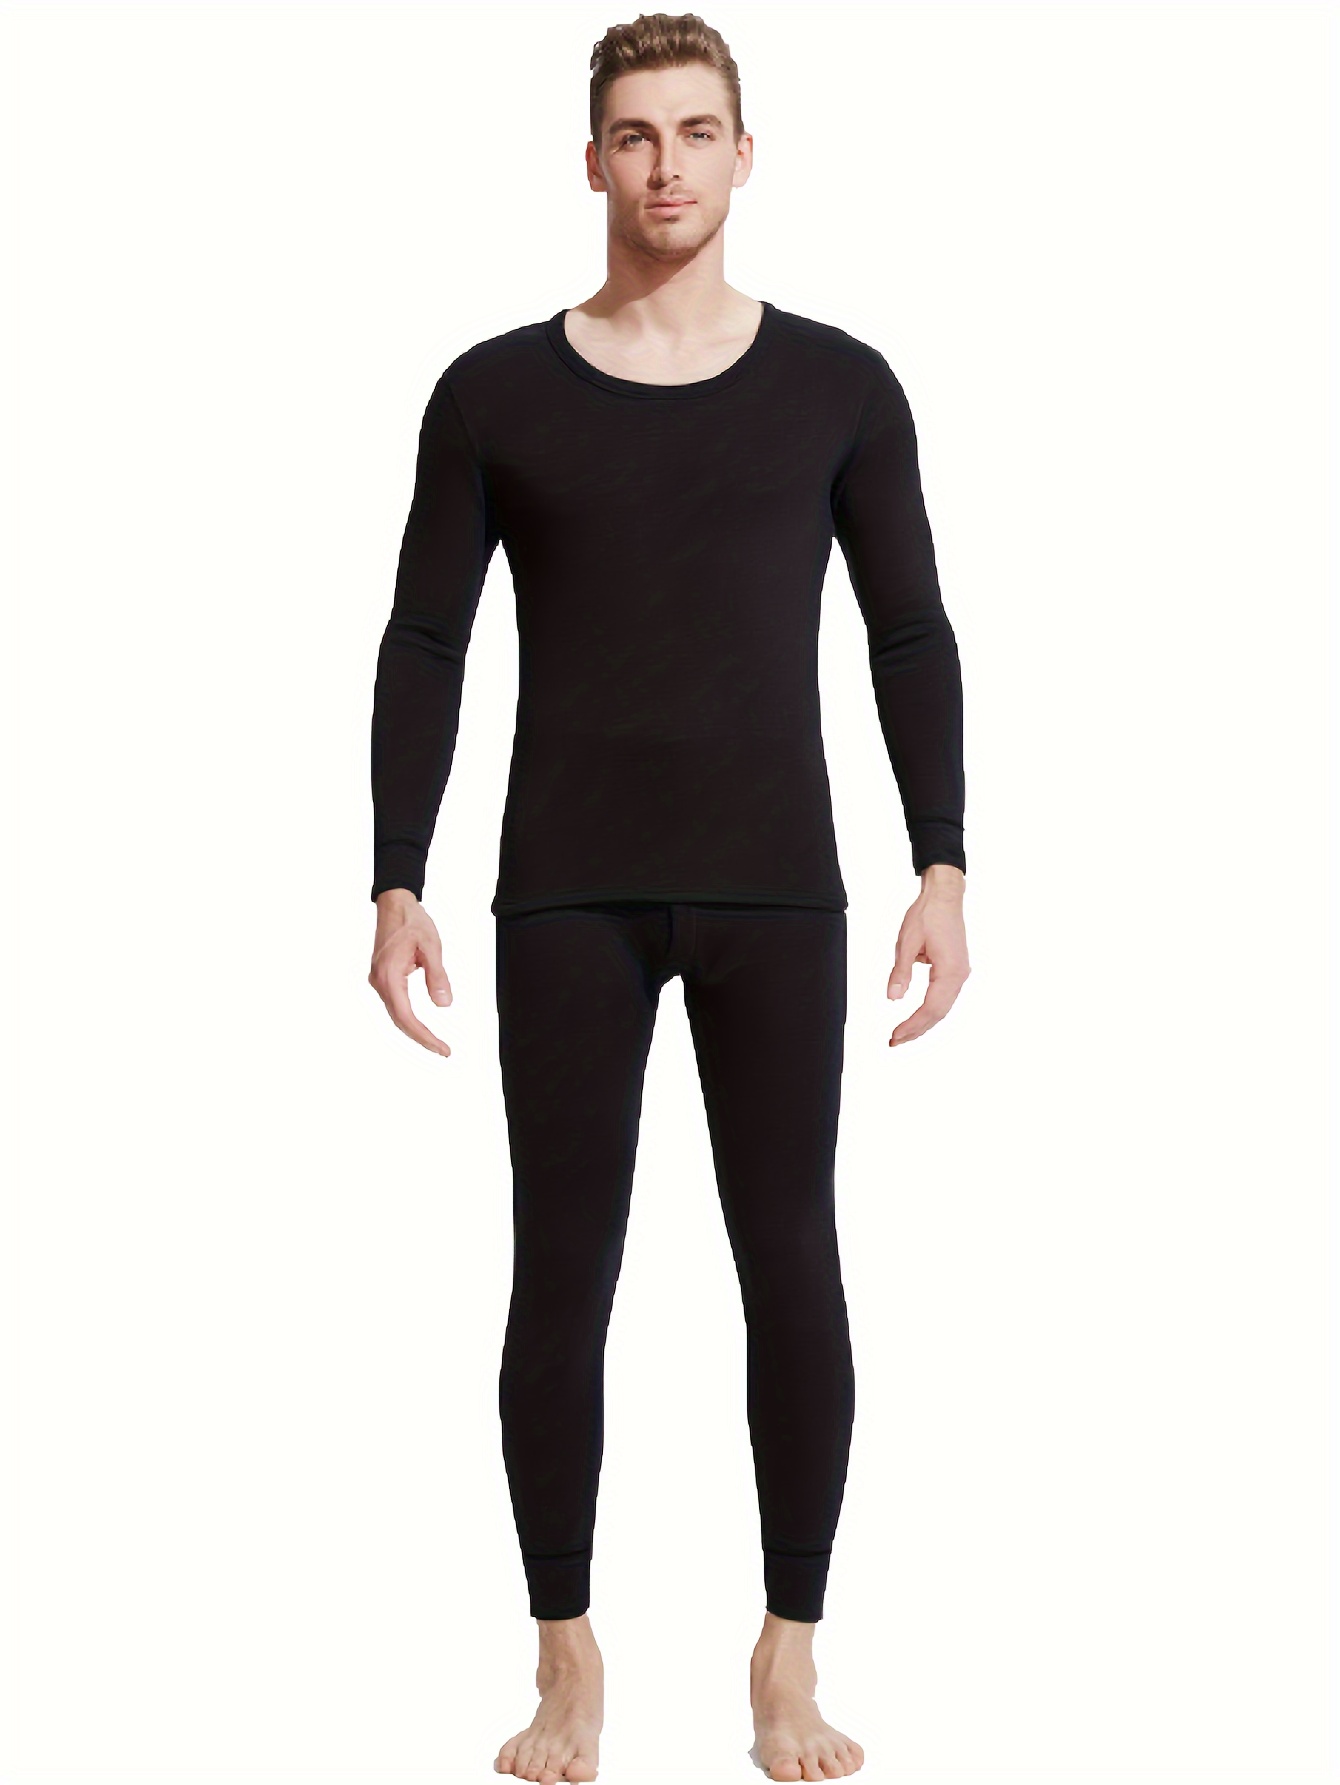 Men's Thermal Underwear Set, Autumn Winter Long Sleeve Crew Neck Bottom  Shirts & Pants, Plain Color Base Layer Set